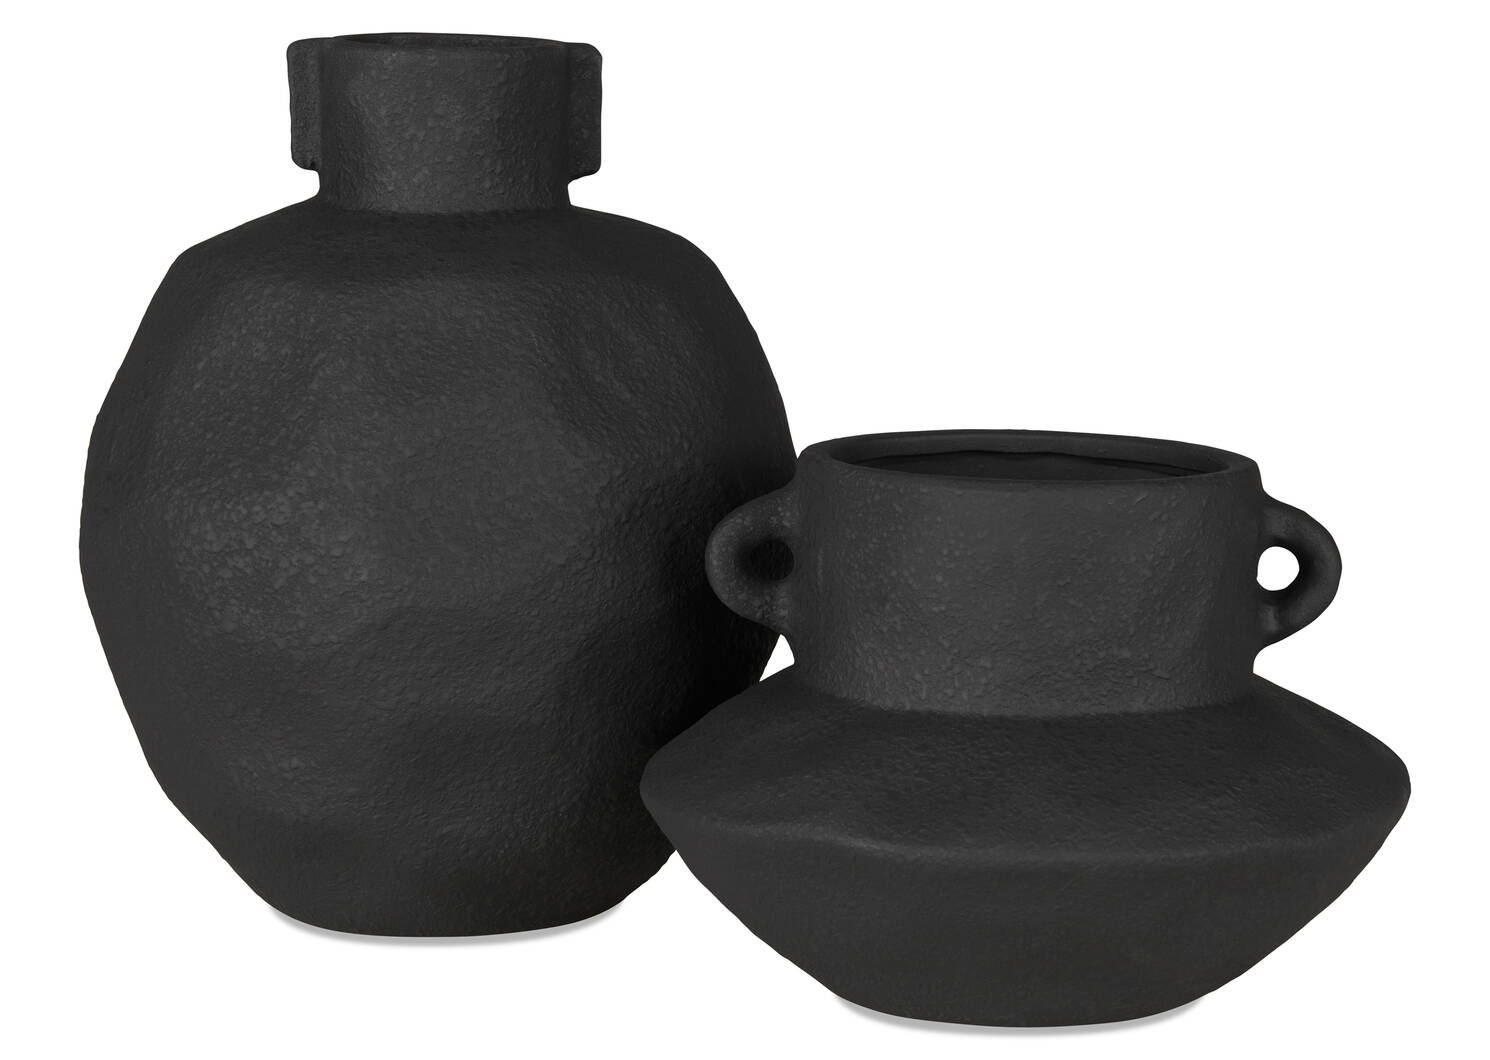 Lotte Vases Black